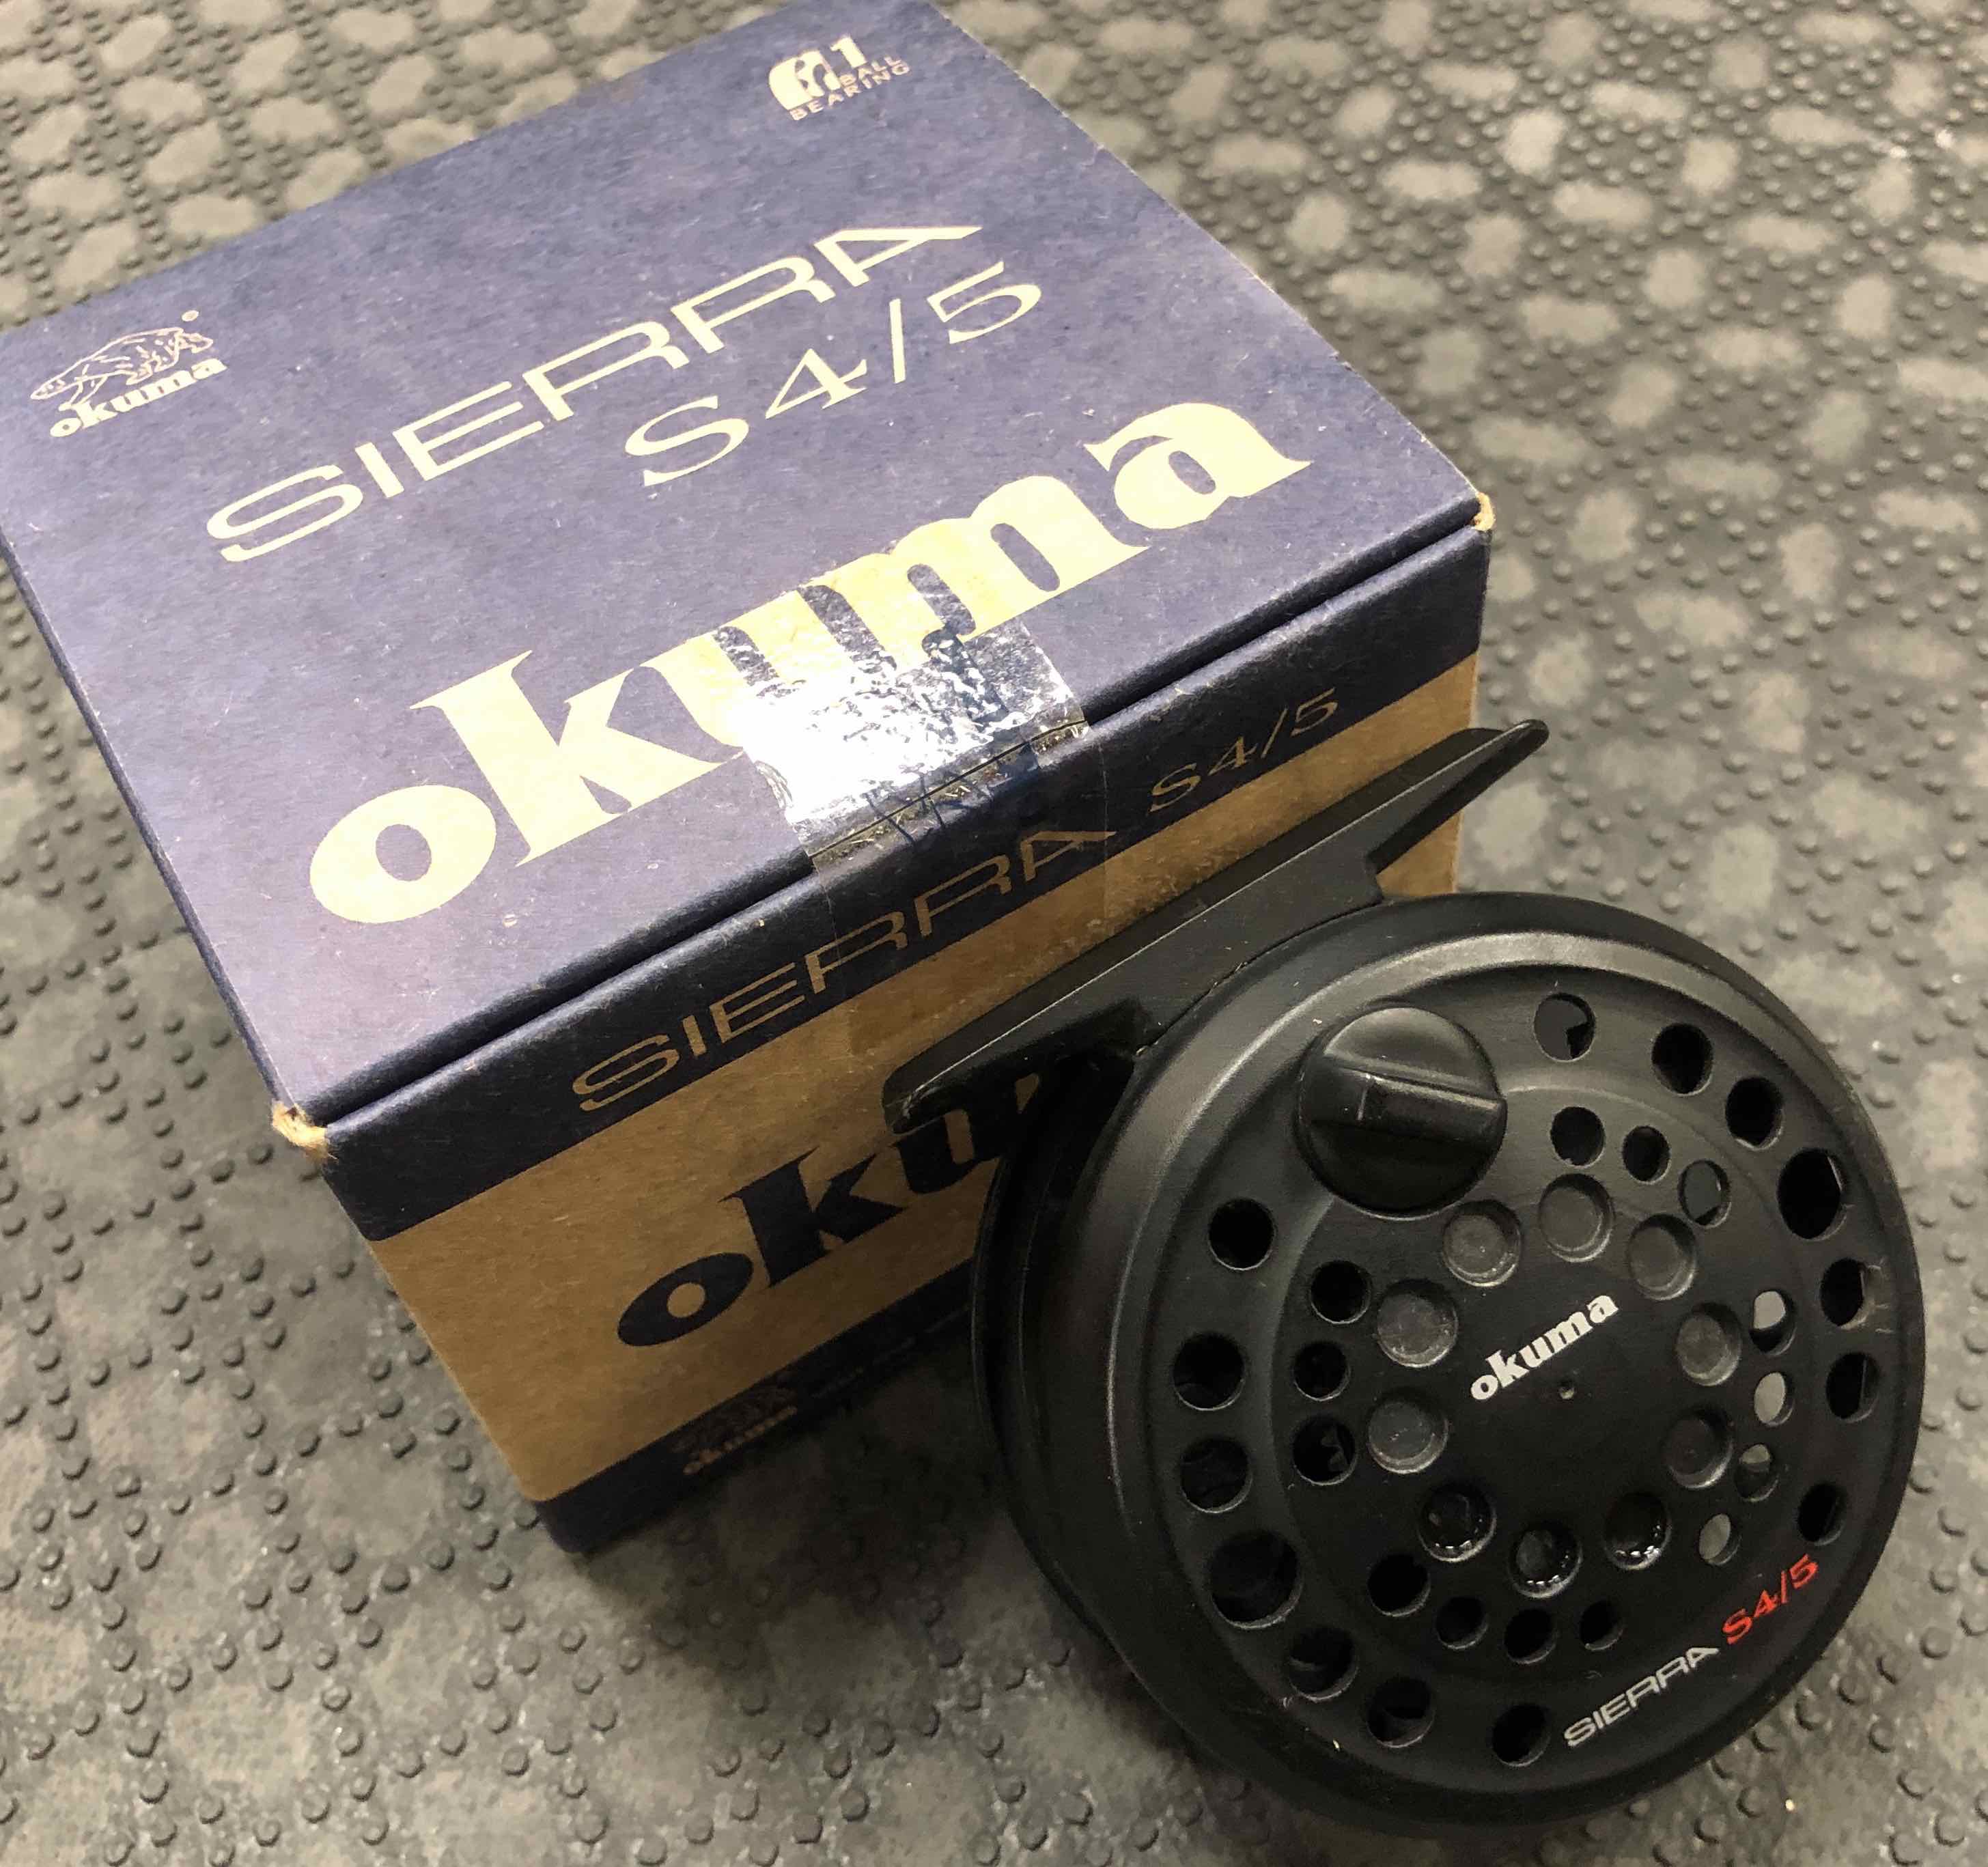 Okuma Sierra S5/6 Fly Reel - $25